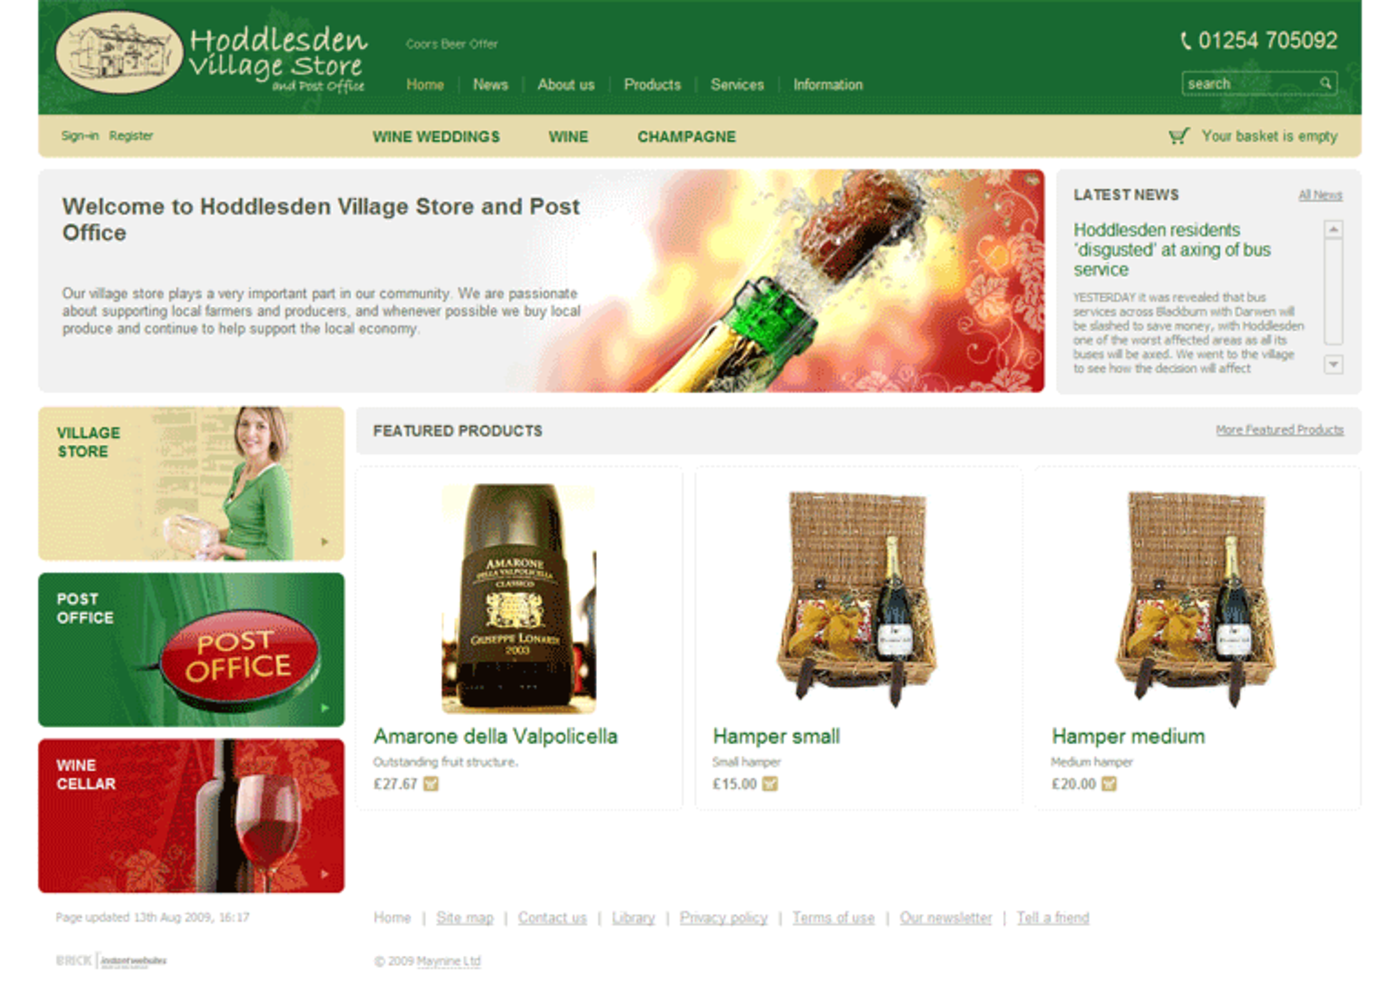 Hoddlesden Village Store Home page